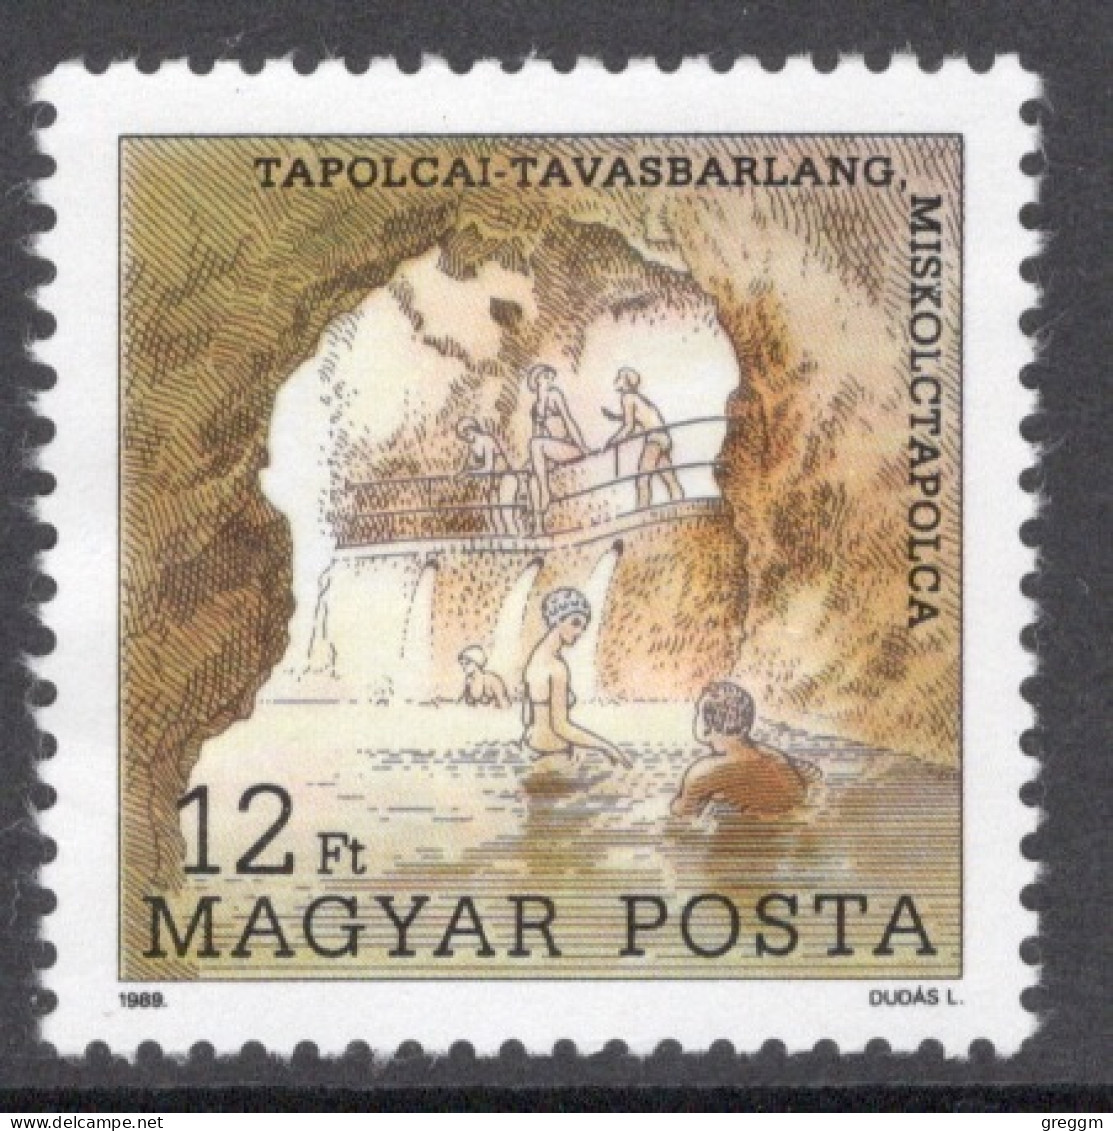 Hungary 1989 Single Stamp Celebrating World Speleology Congress In Fine Used - Usado